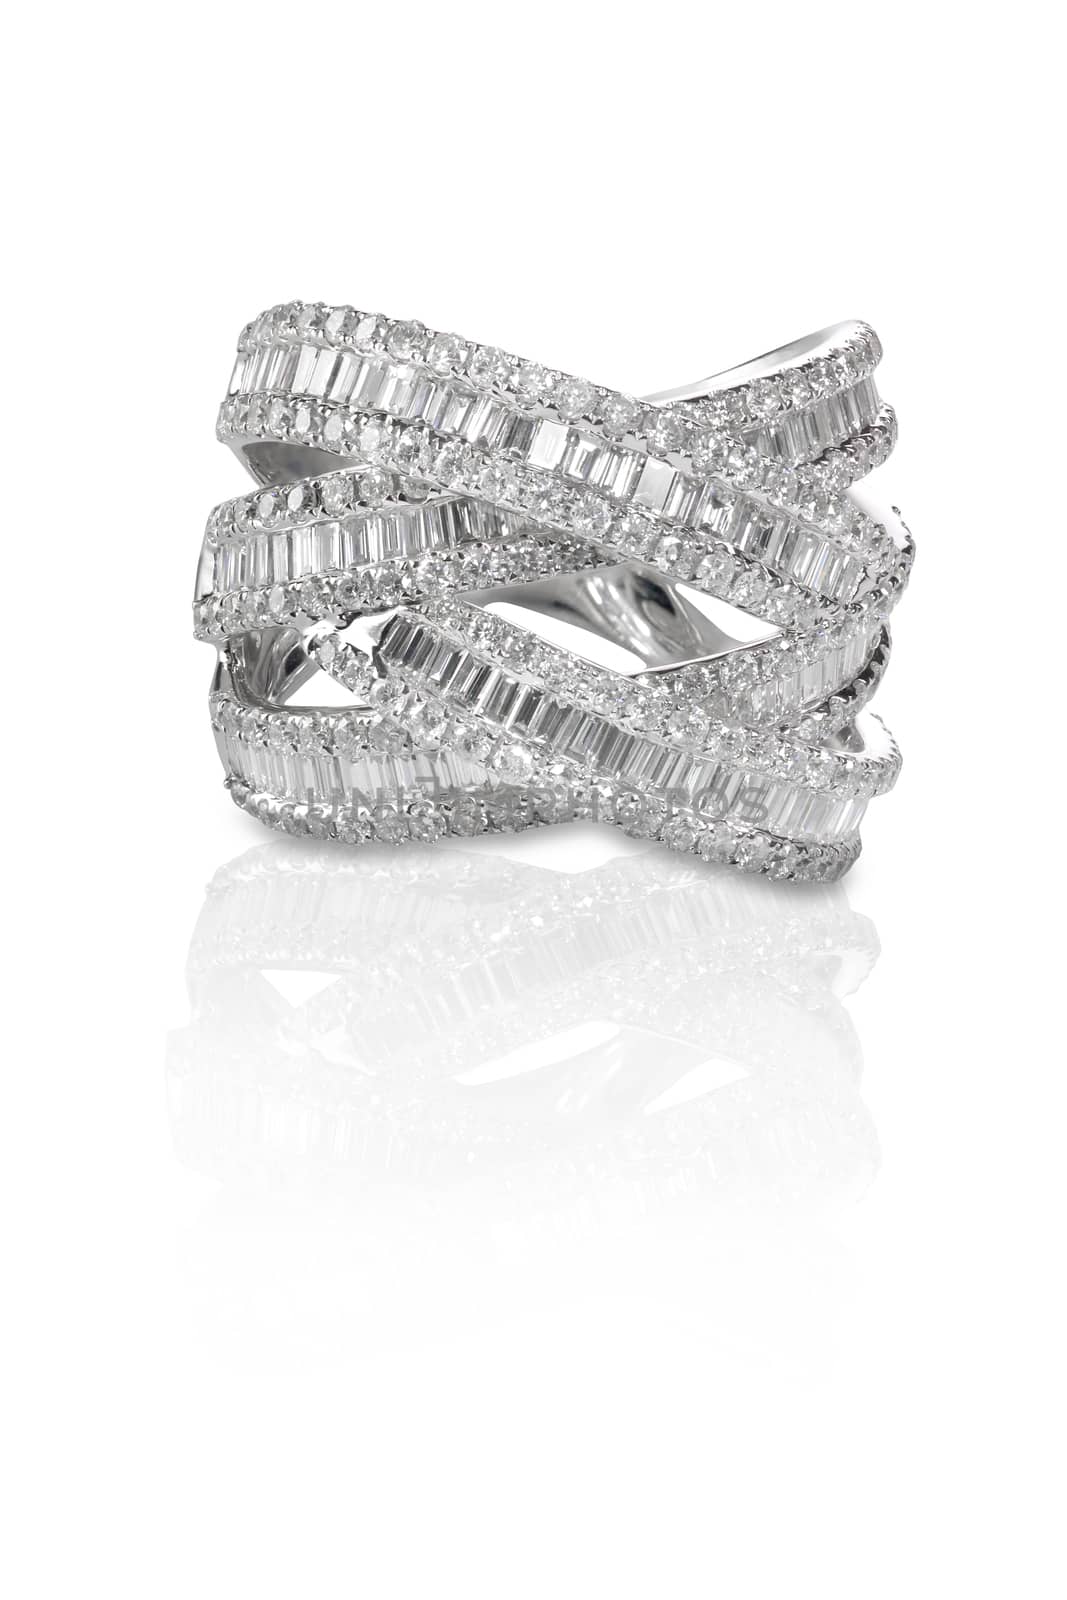 Diamond encrusted engagment wedding anniversary ring by fruitcocktail